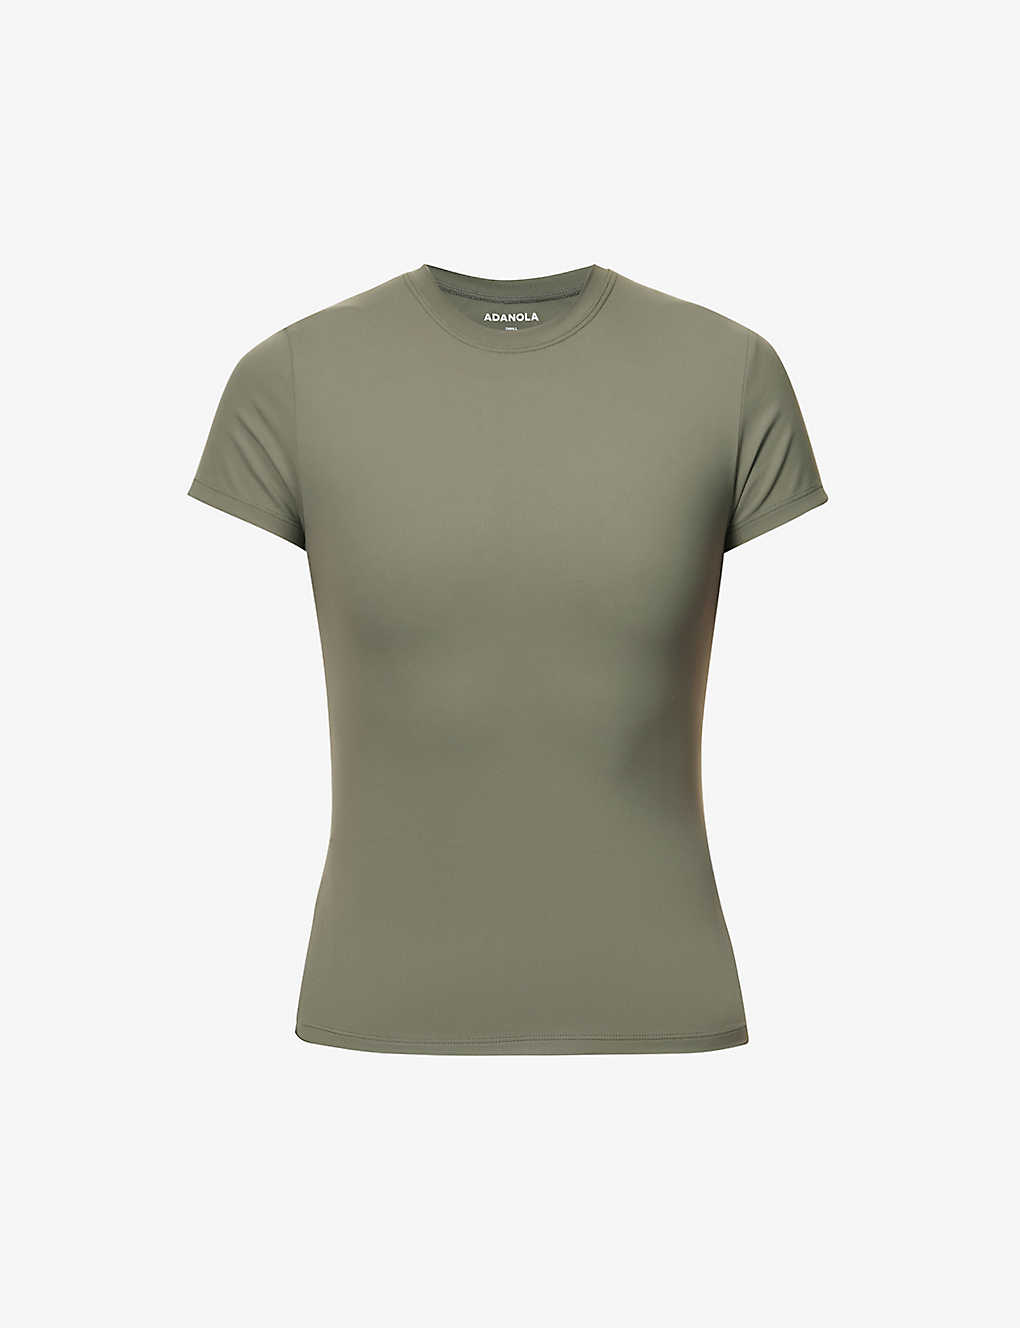 Adanola Womens Olive Green Soft Basics Brand-print Stretch-woven T-shirt